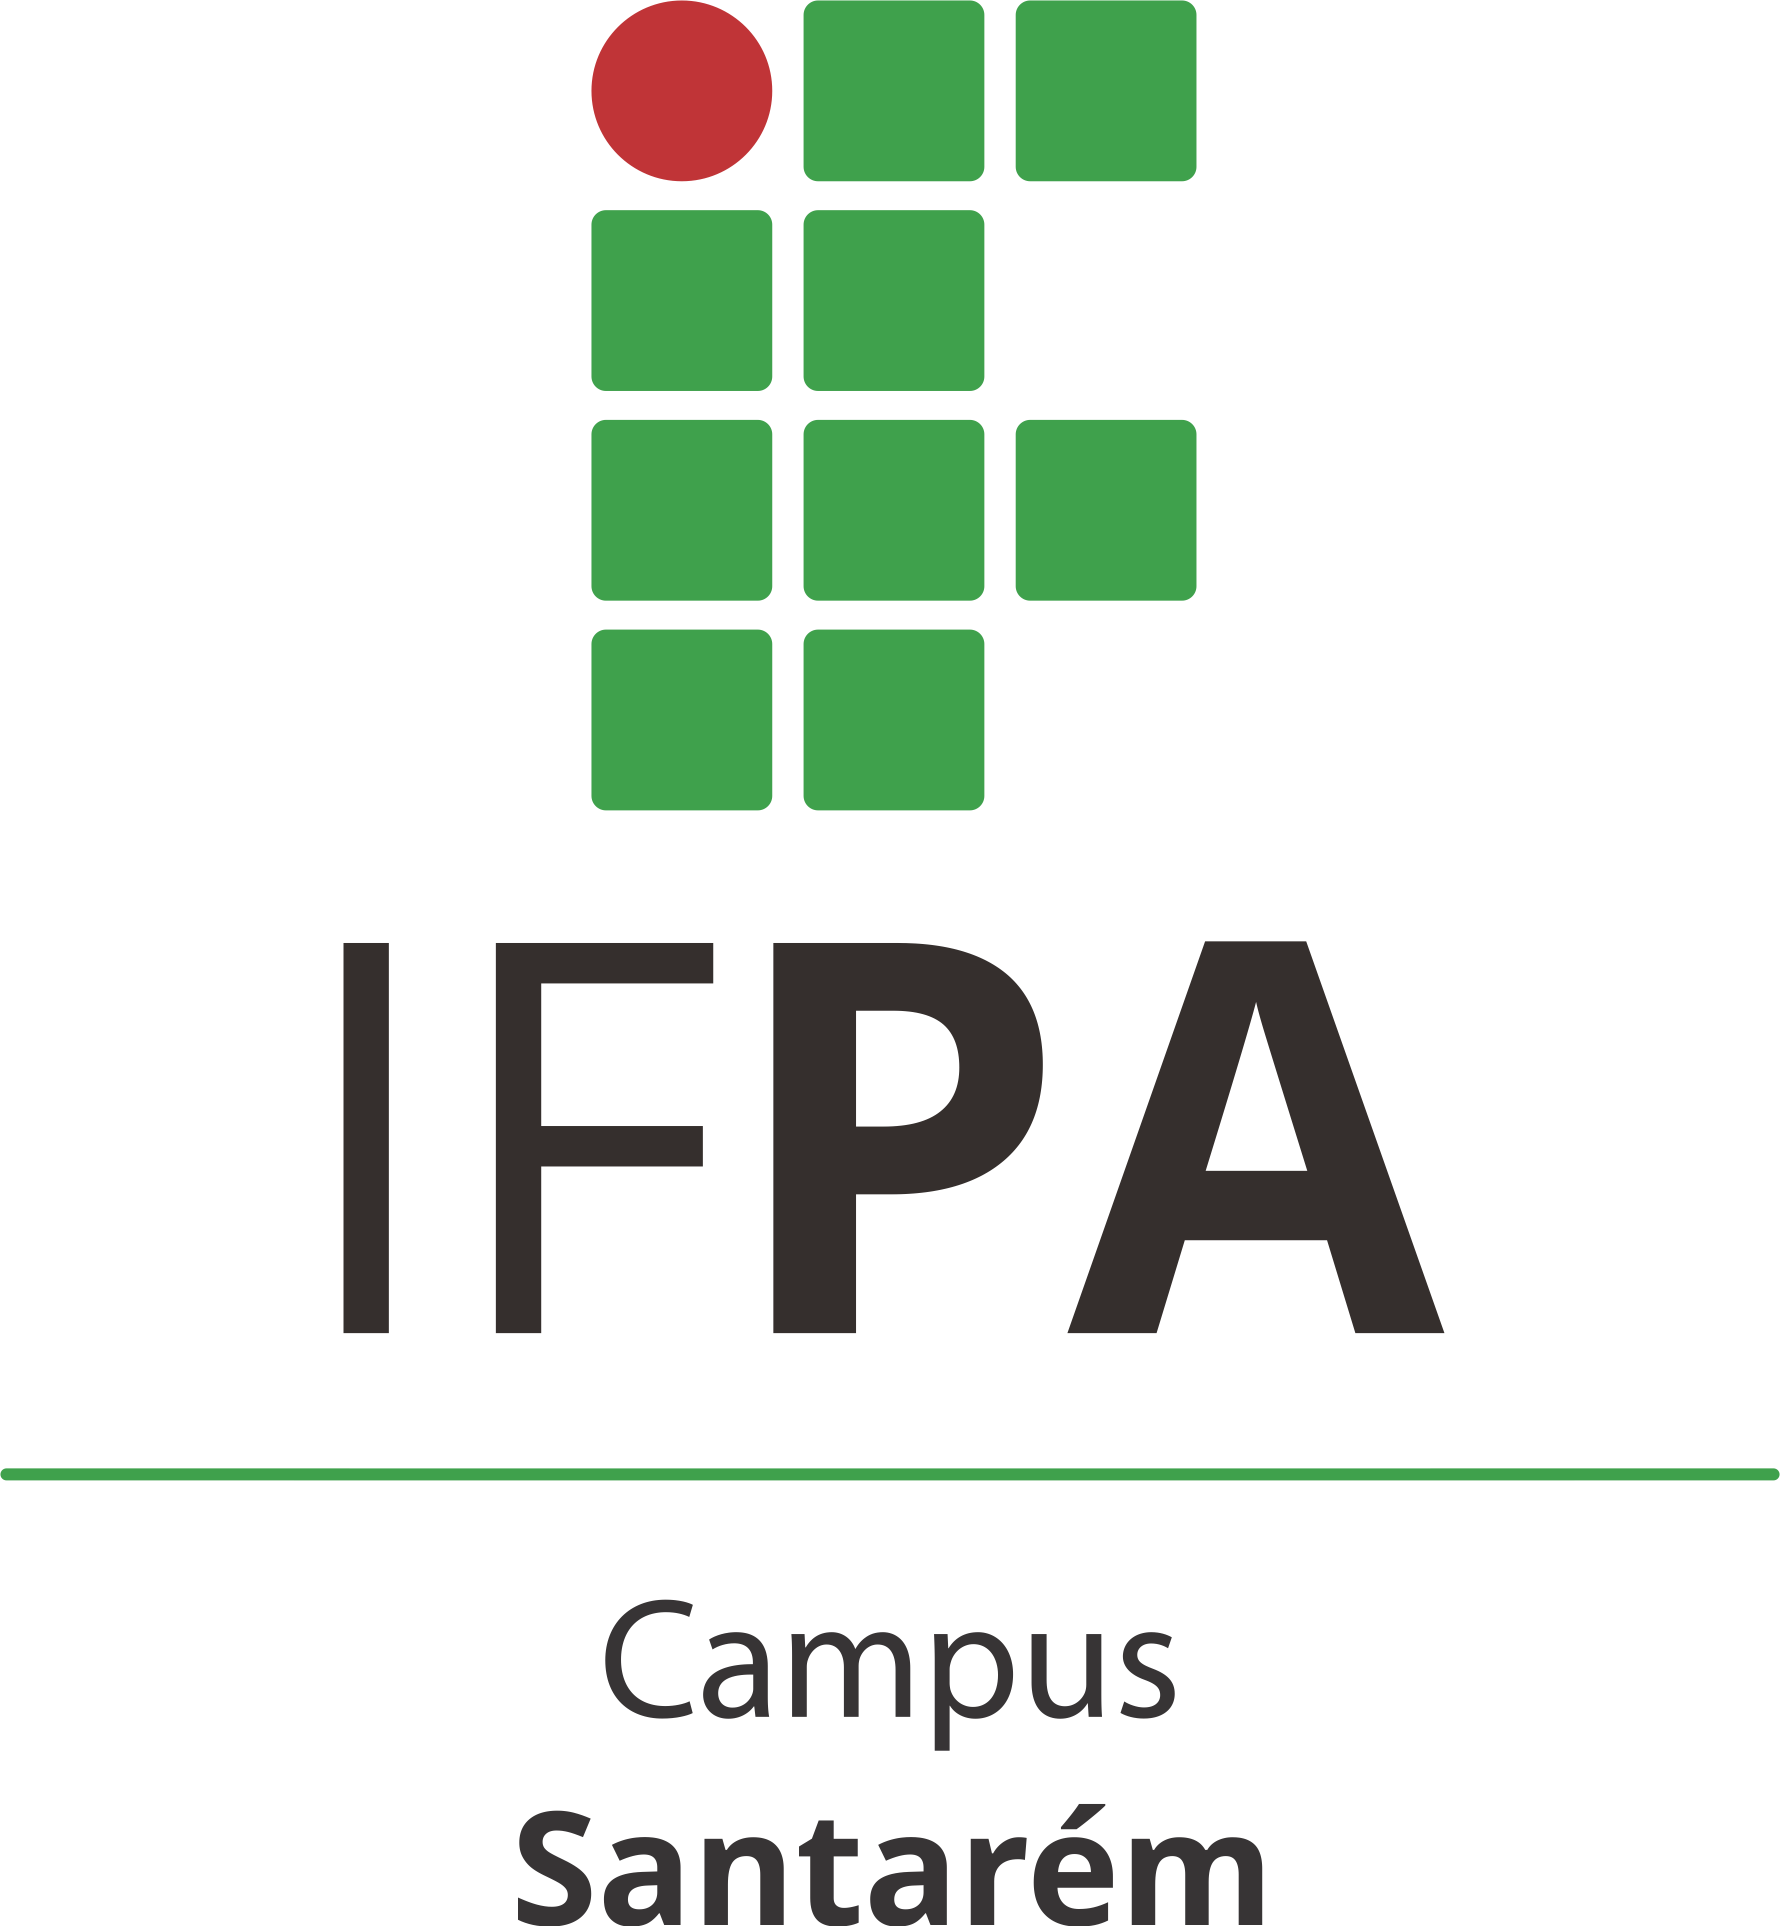 IFPA - Campus Santarém - Logos Do Campus Santarém